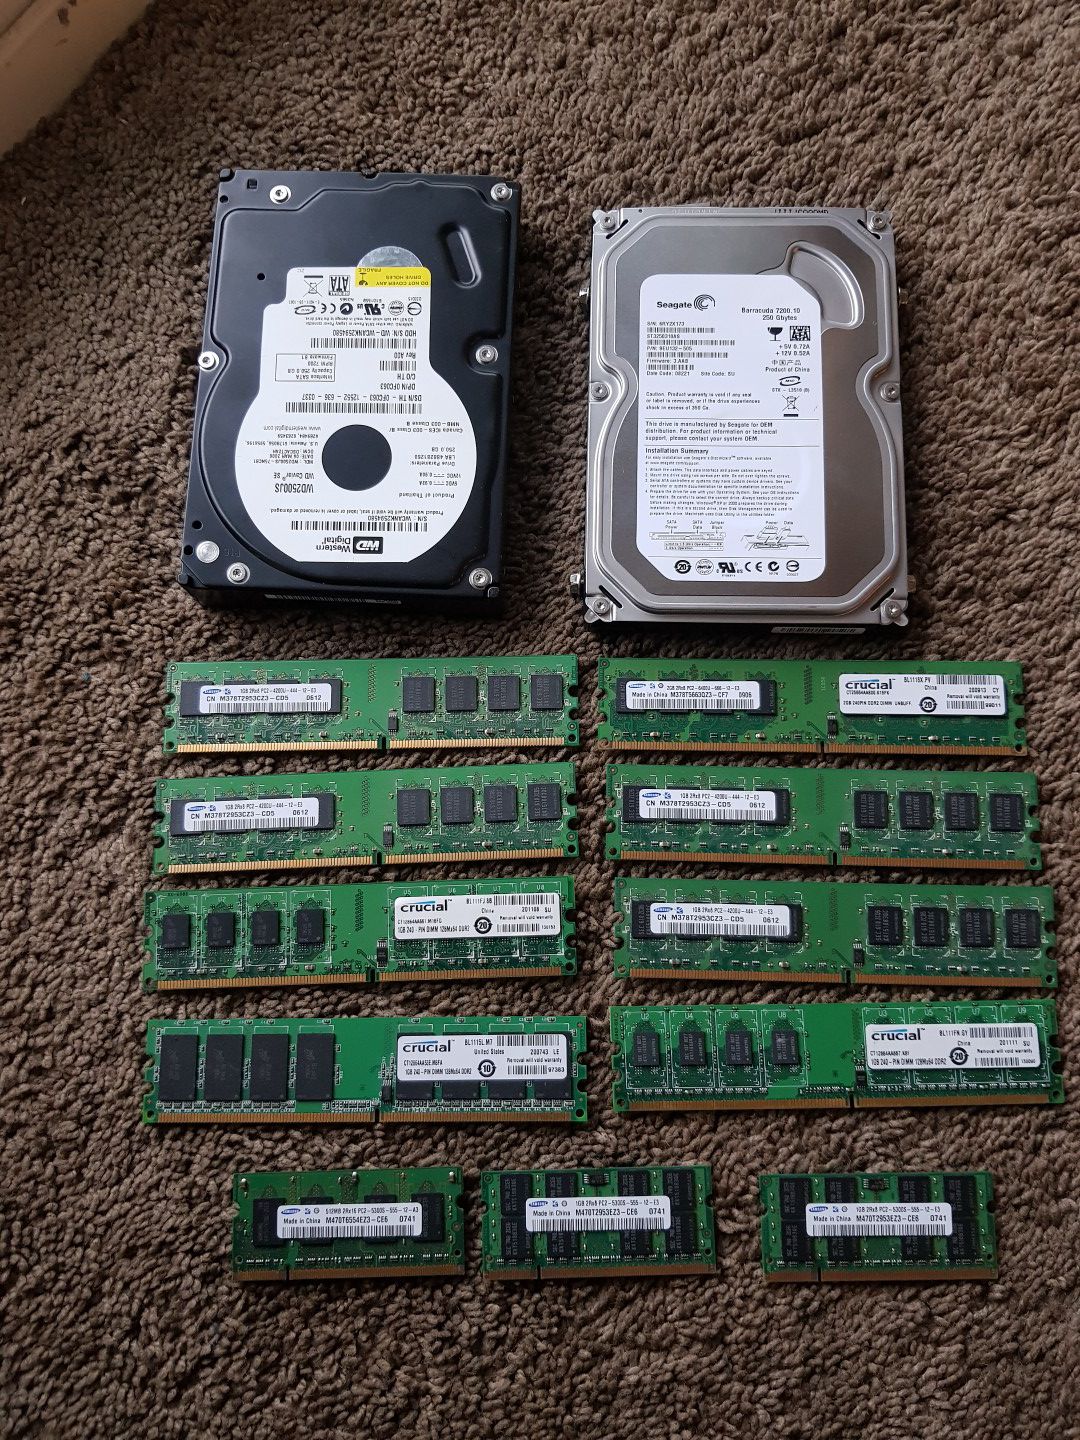 Computer parts 2 hard drive and many RAM